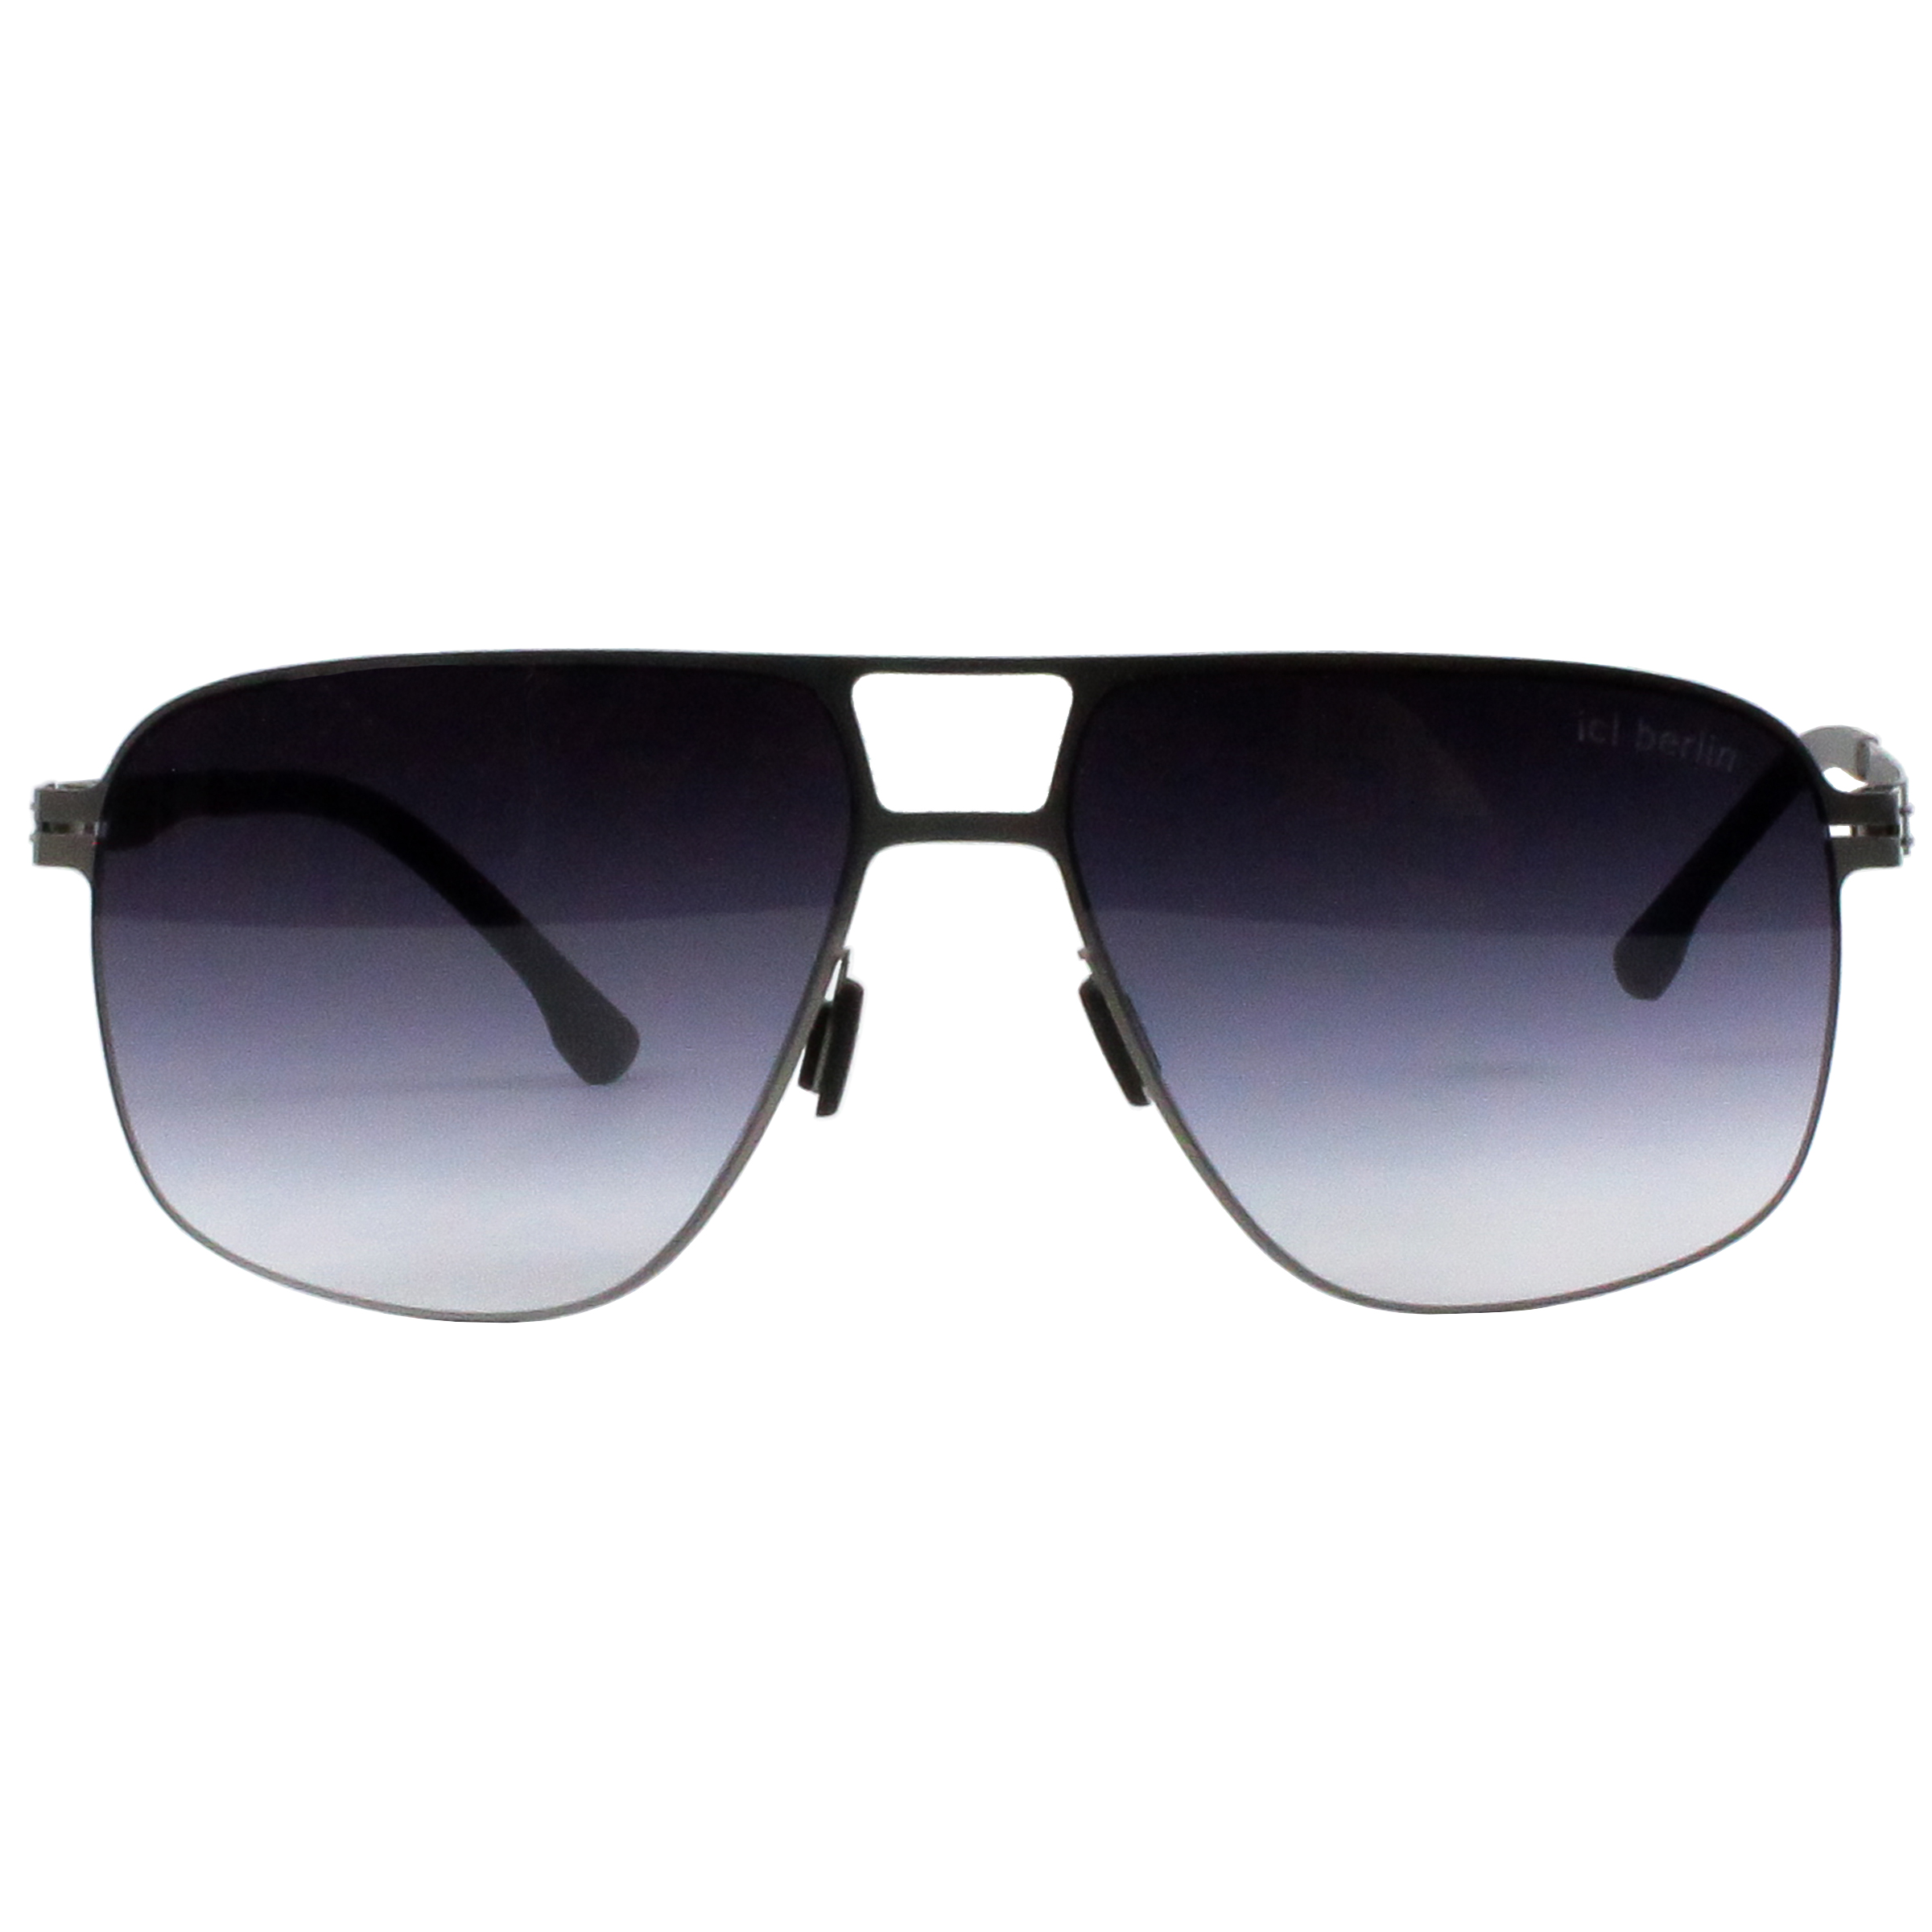 عینک آفتابی مردانه ایس برلین مدل Bruce PS 18019 D